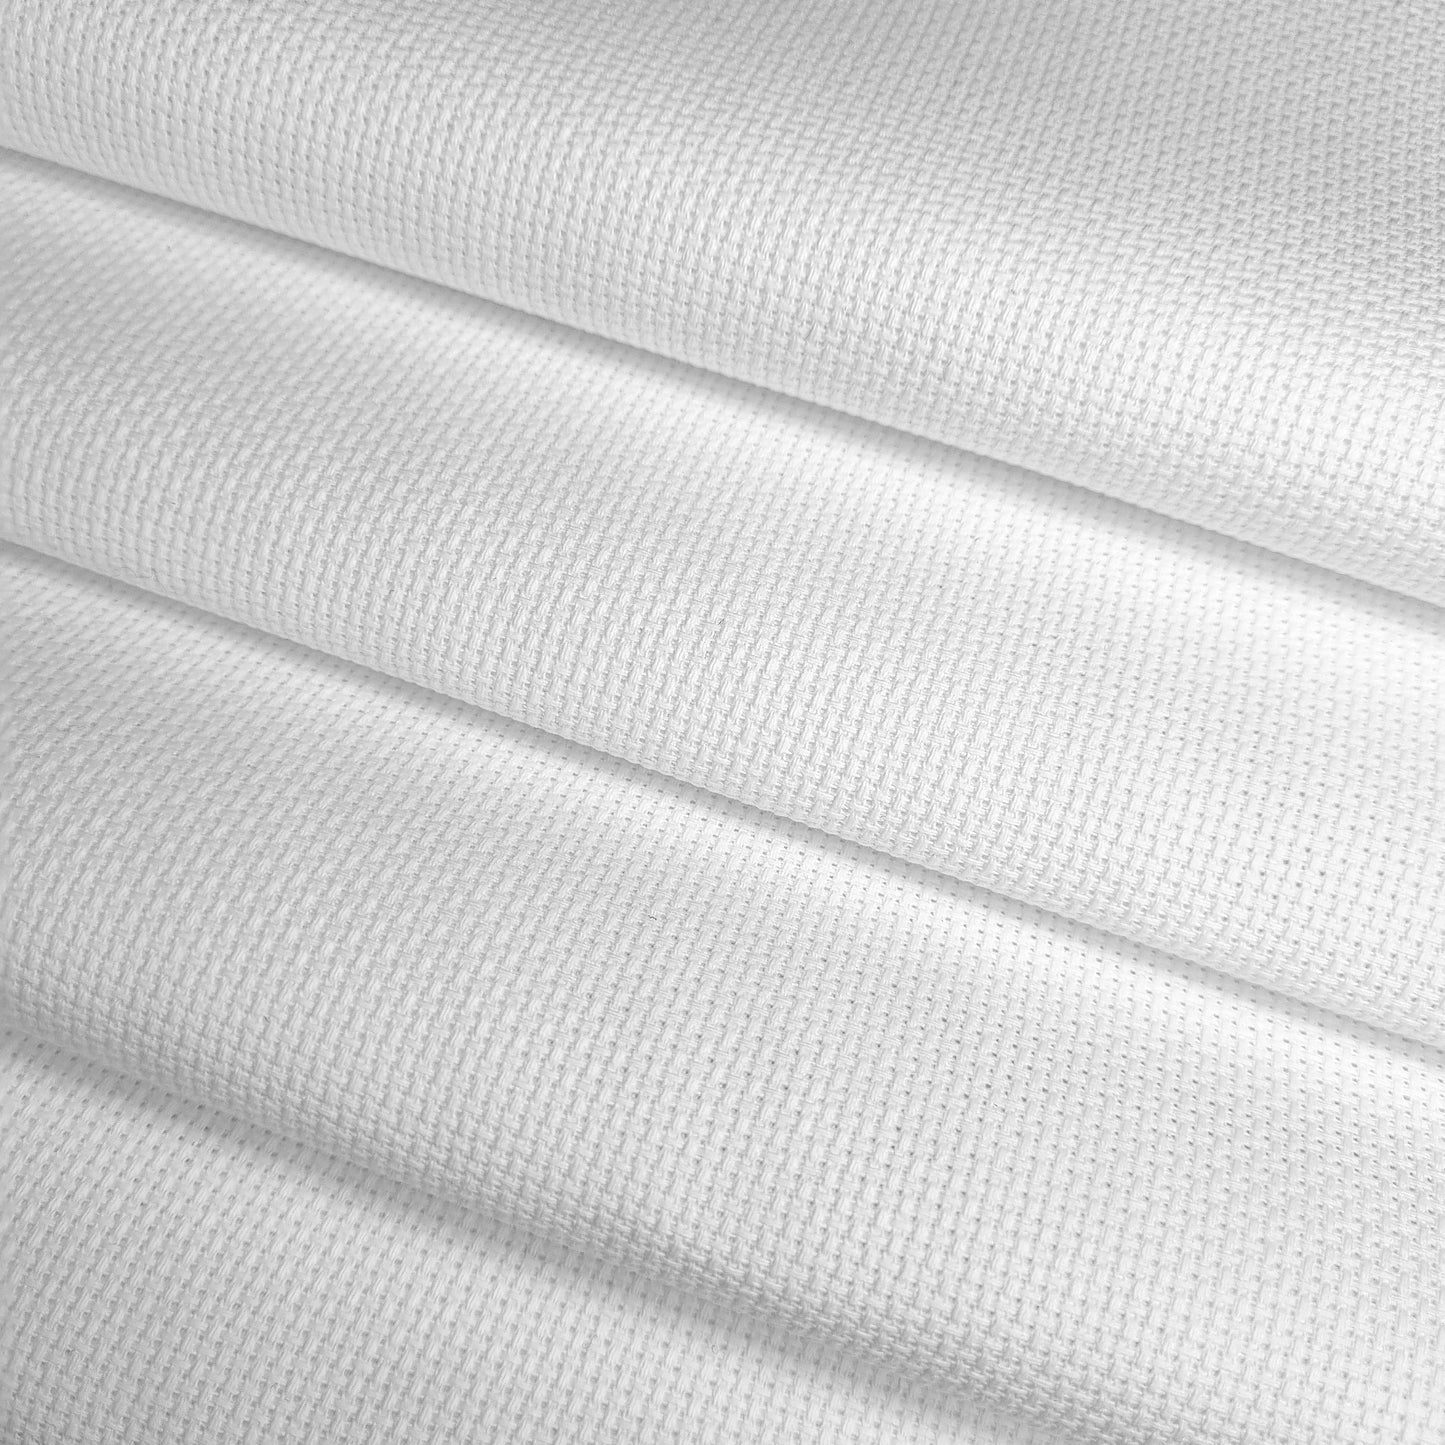 4 Pieces of 16 Count White Aida Fabric 20 x 21.5 Inches / 50cm x 55cm